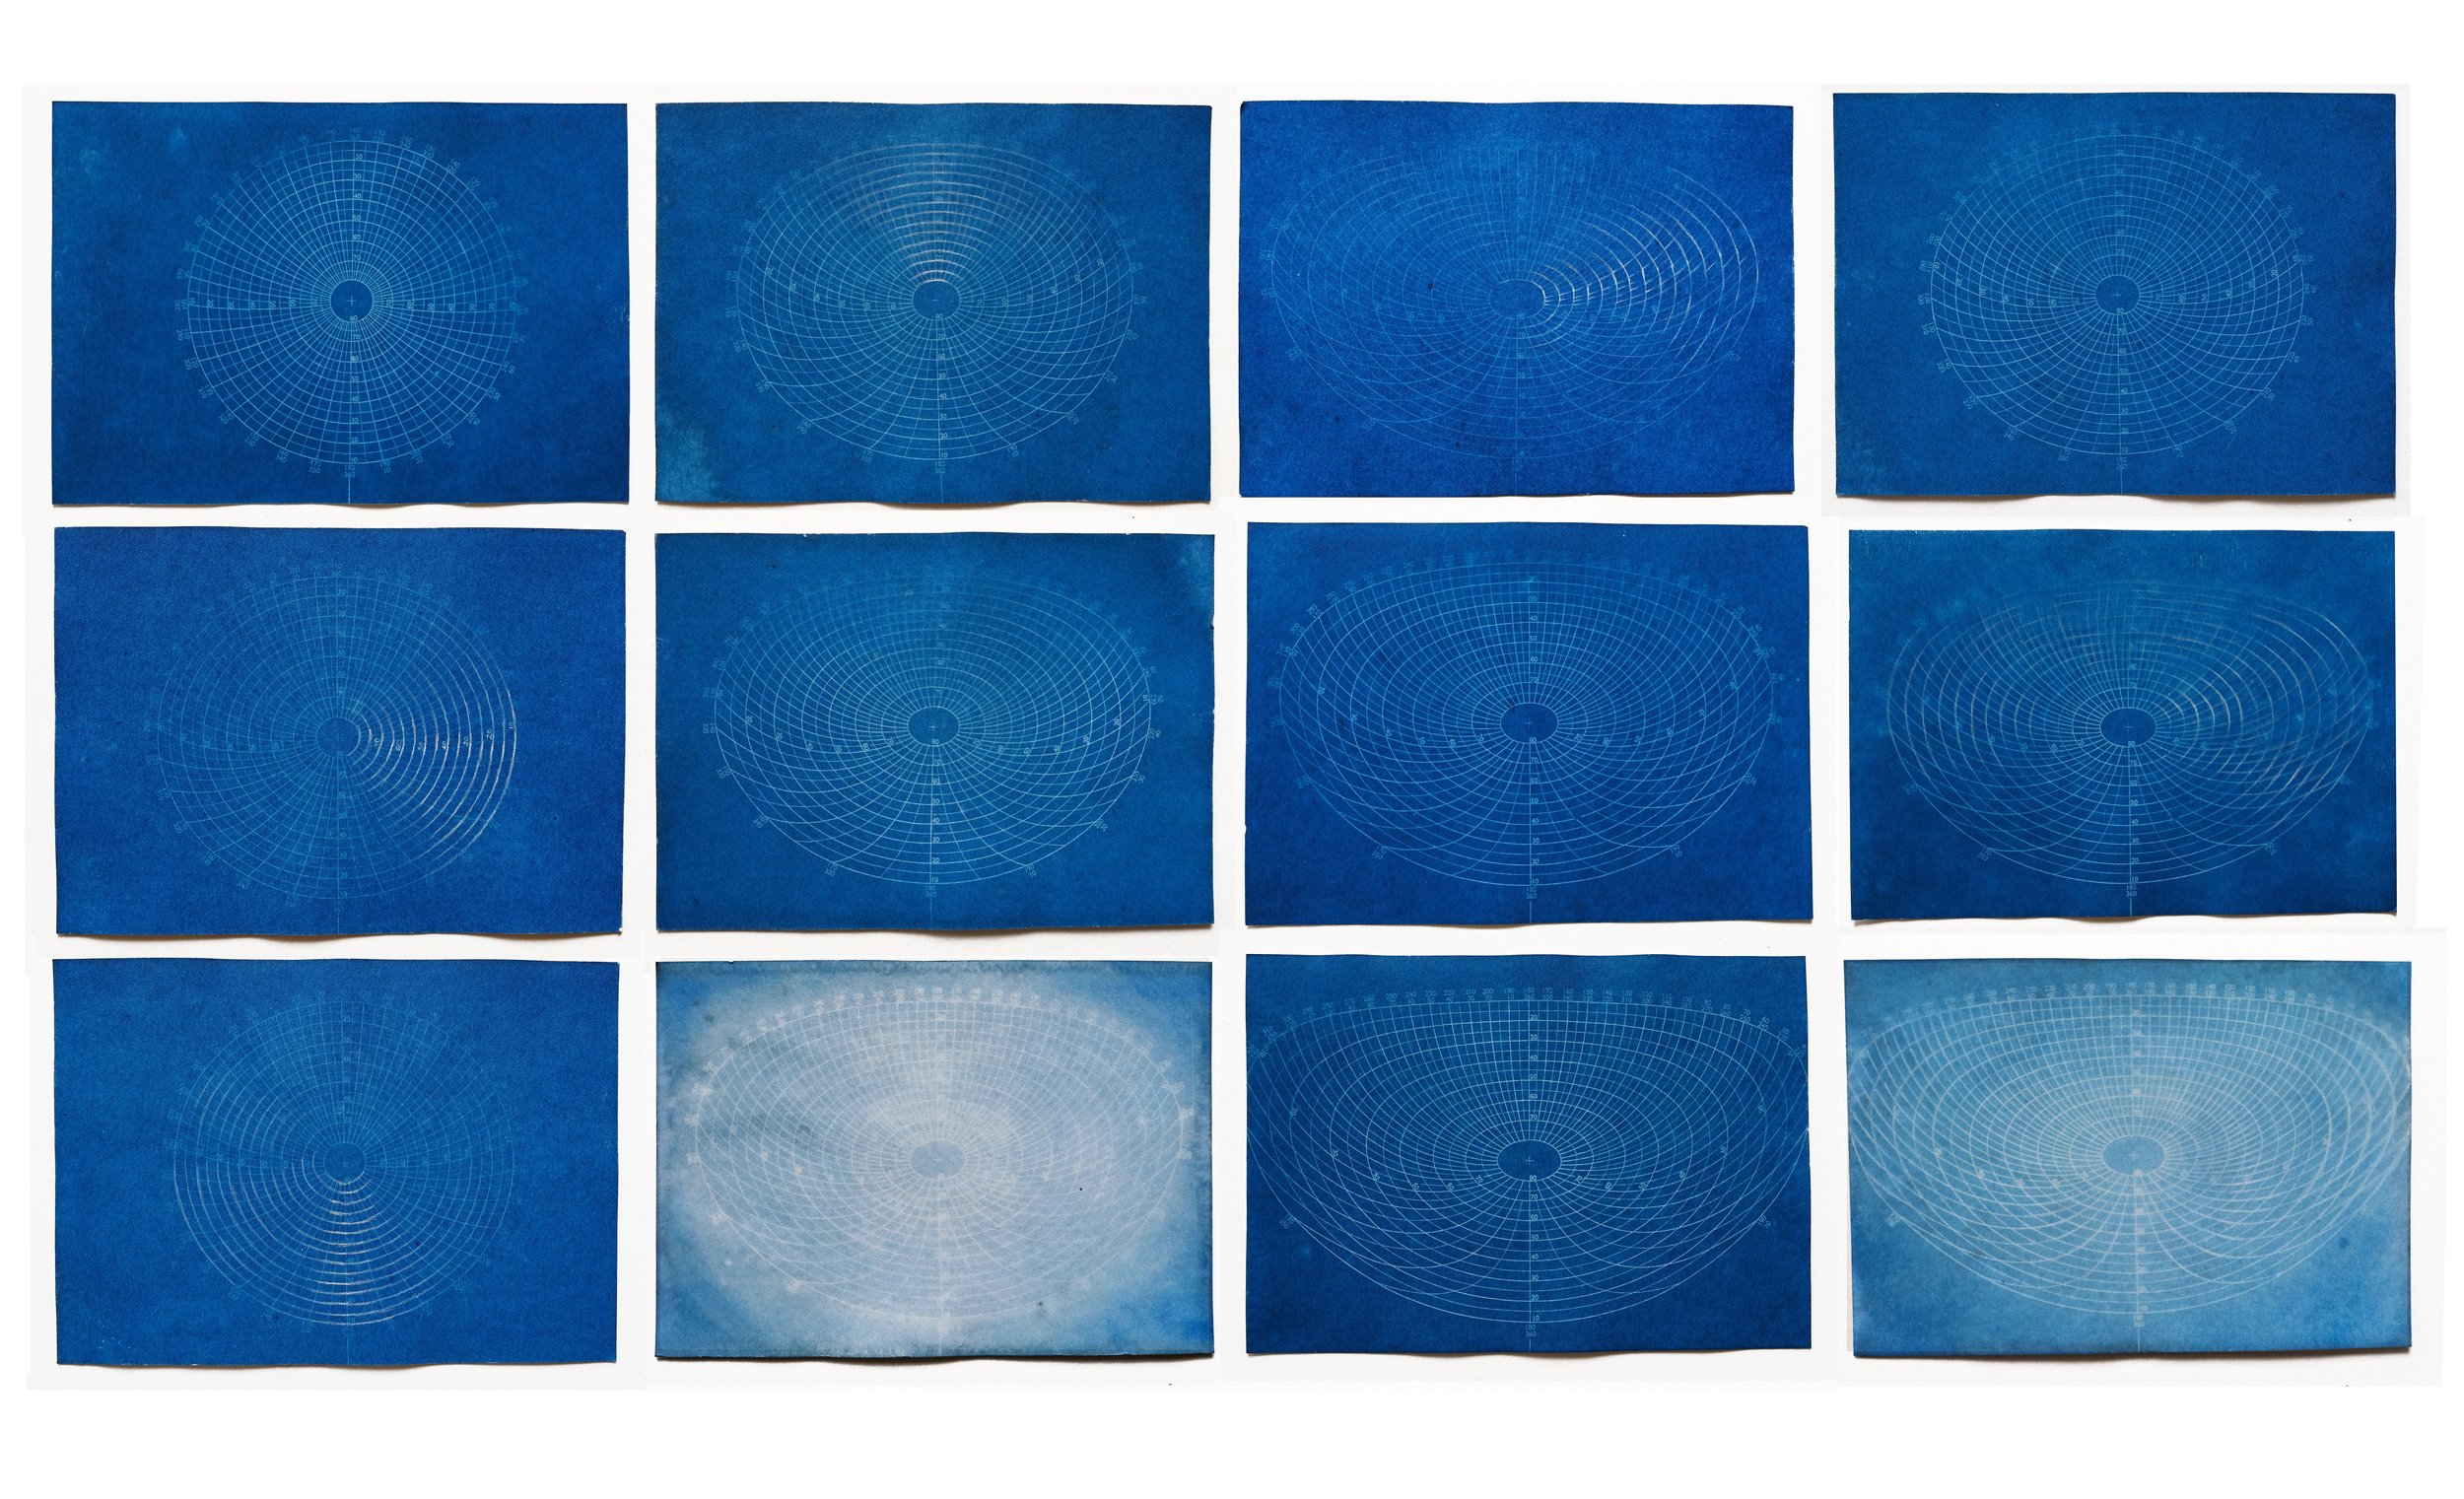  Rohini Devasher,  The Mirrored Sky , 2018, Cyanotype on paper, 17 x 12.5 cm each 